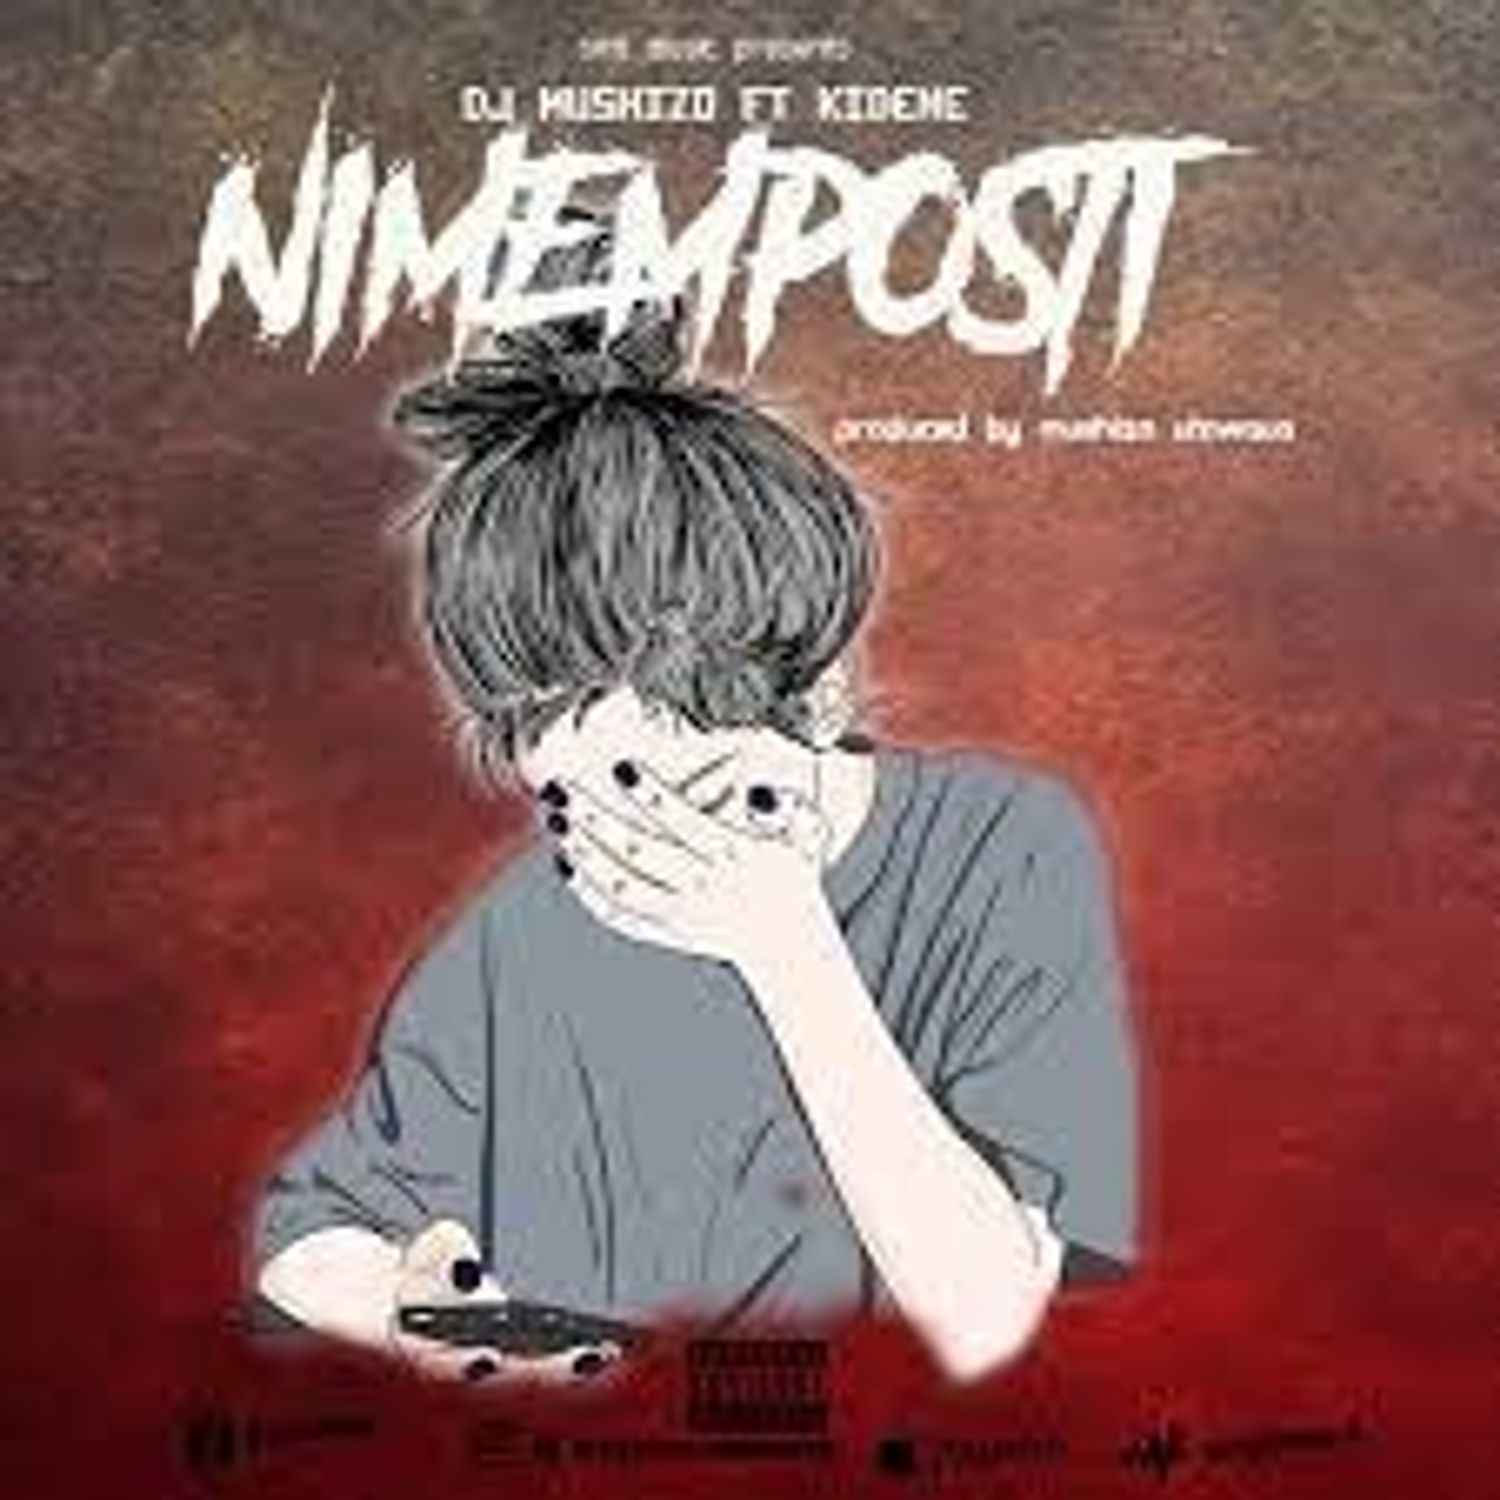 DJ Mushizo ft Kidene - Nimempost Mp3 Download